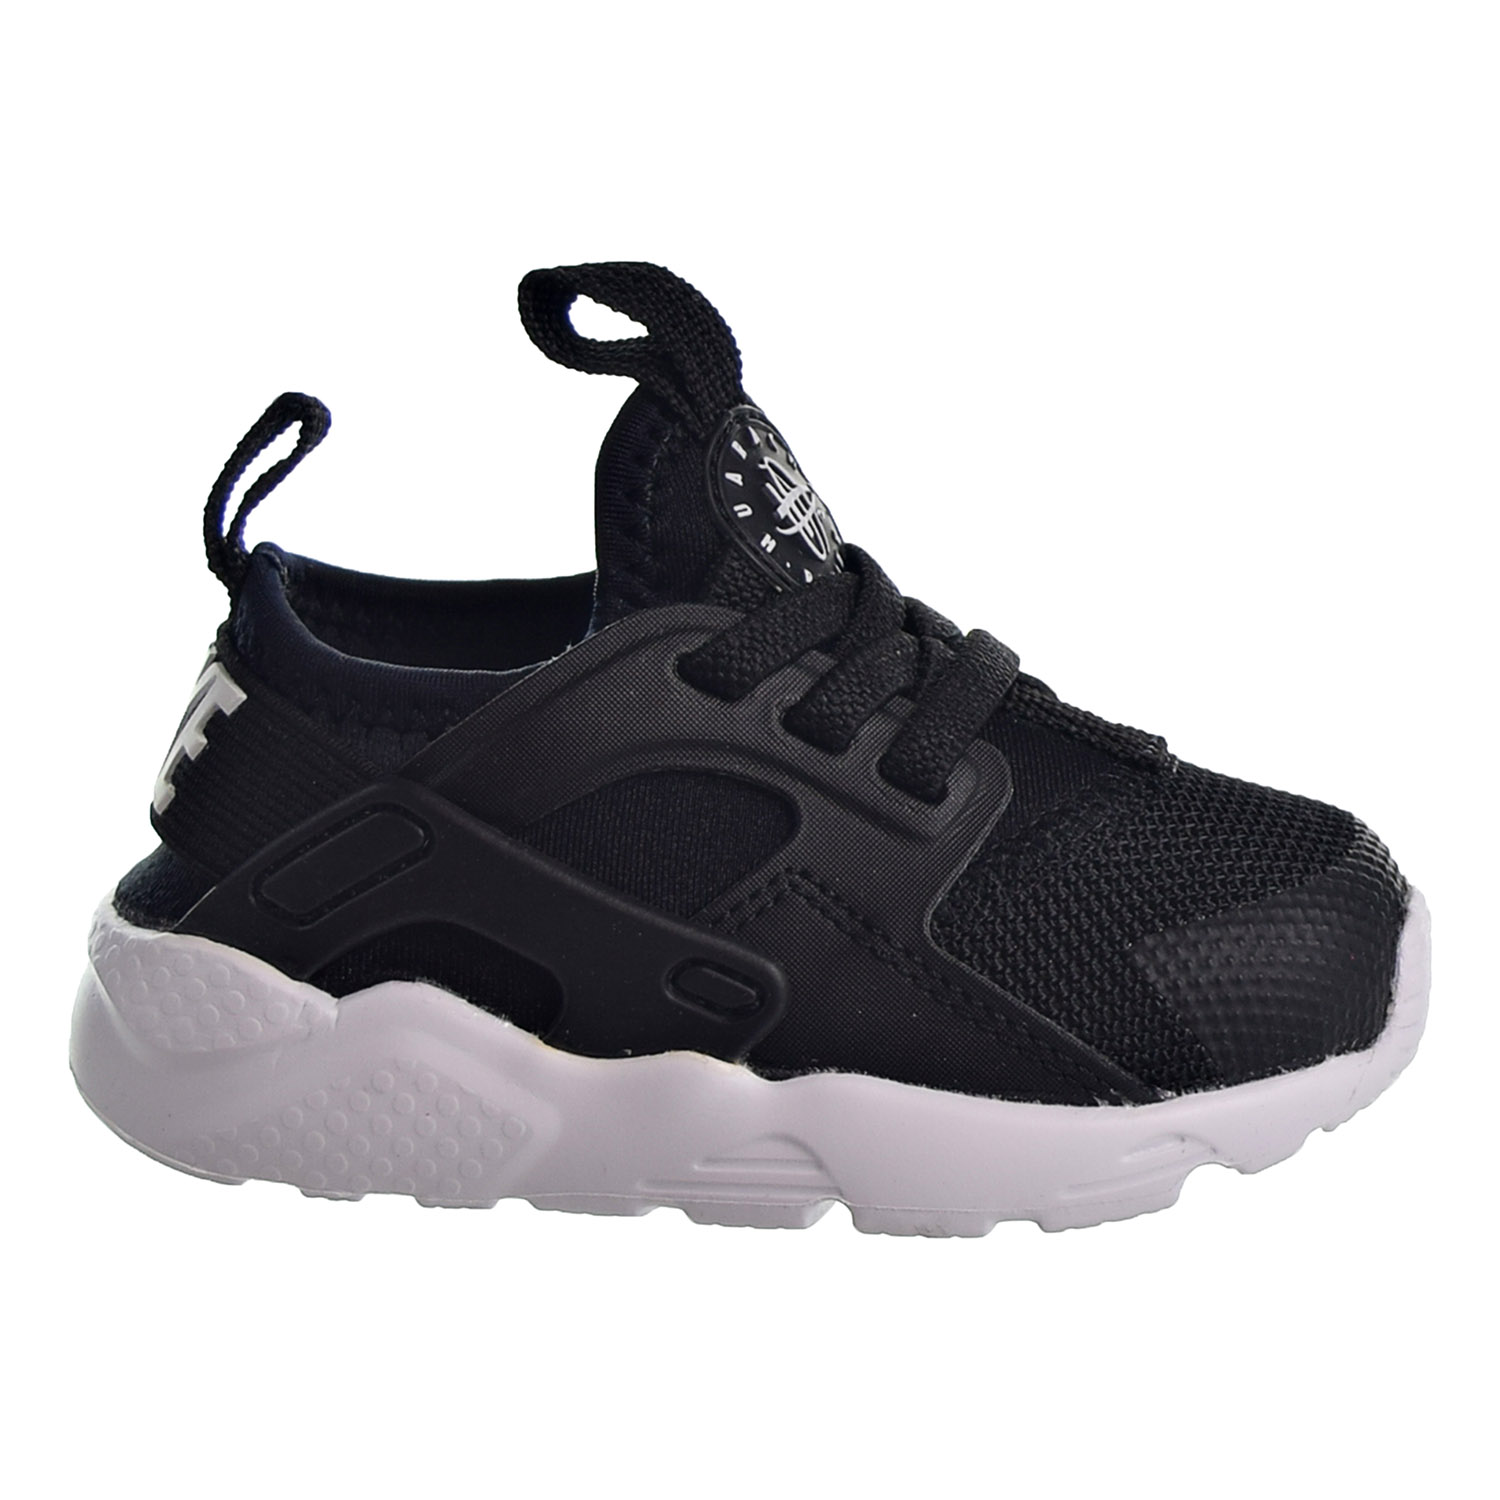 Running Shoes Black-White 859594-020 